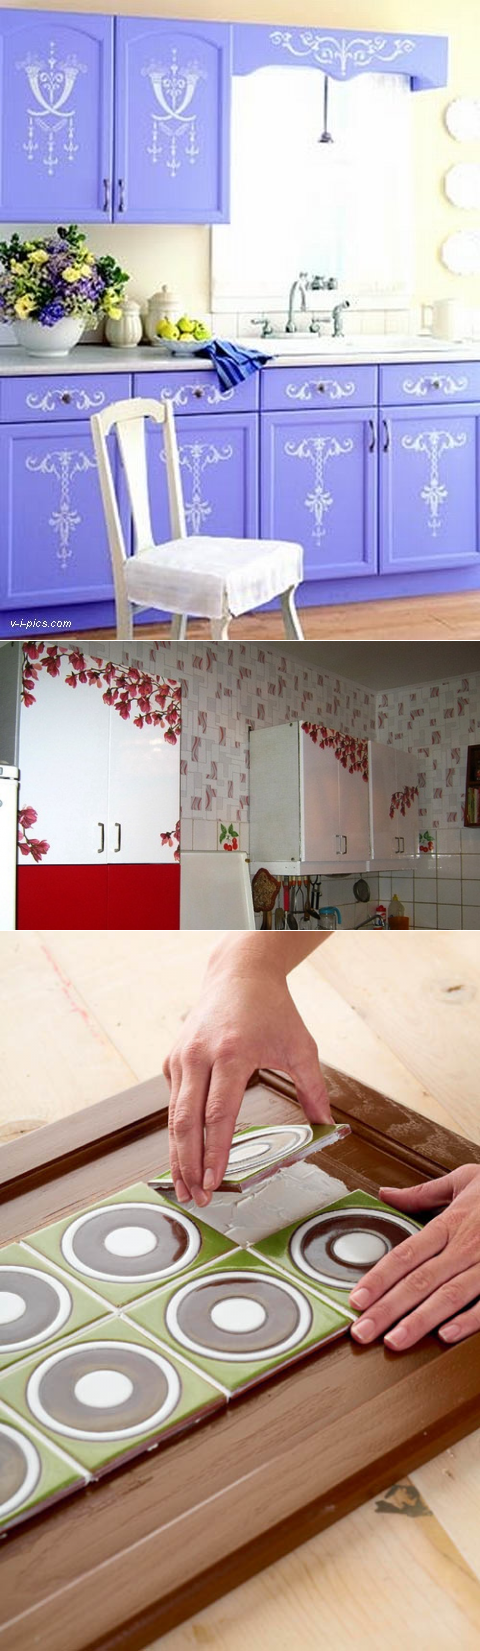 Покраска кухни своими руками: пошаговая инструкция с фото и видео